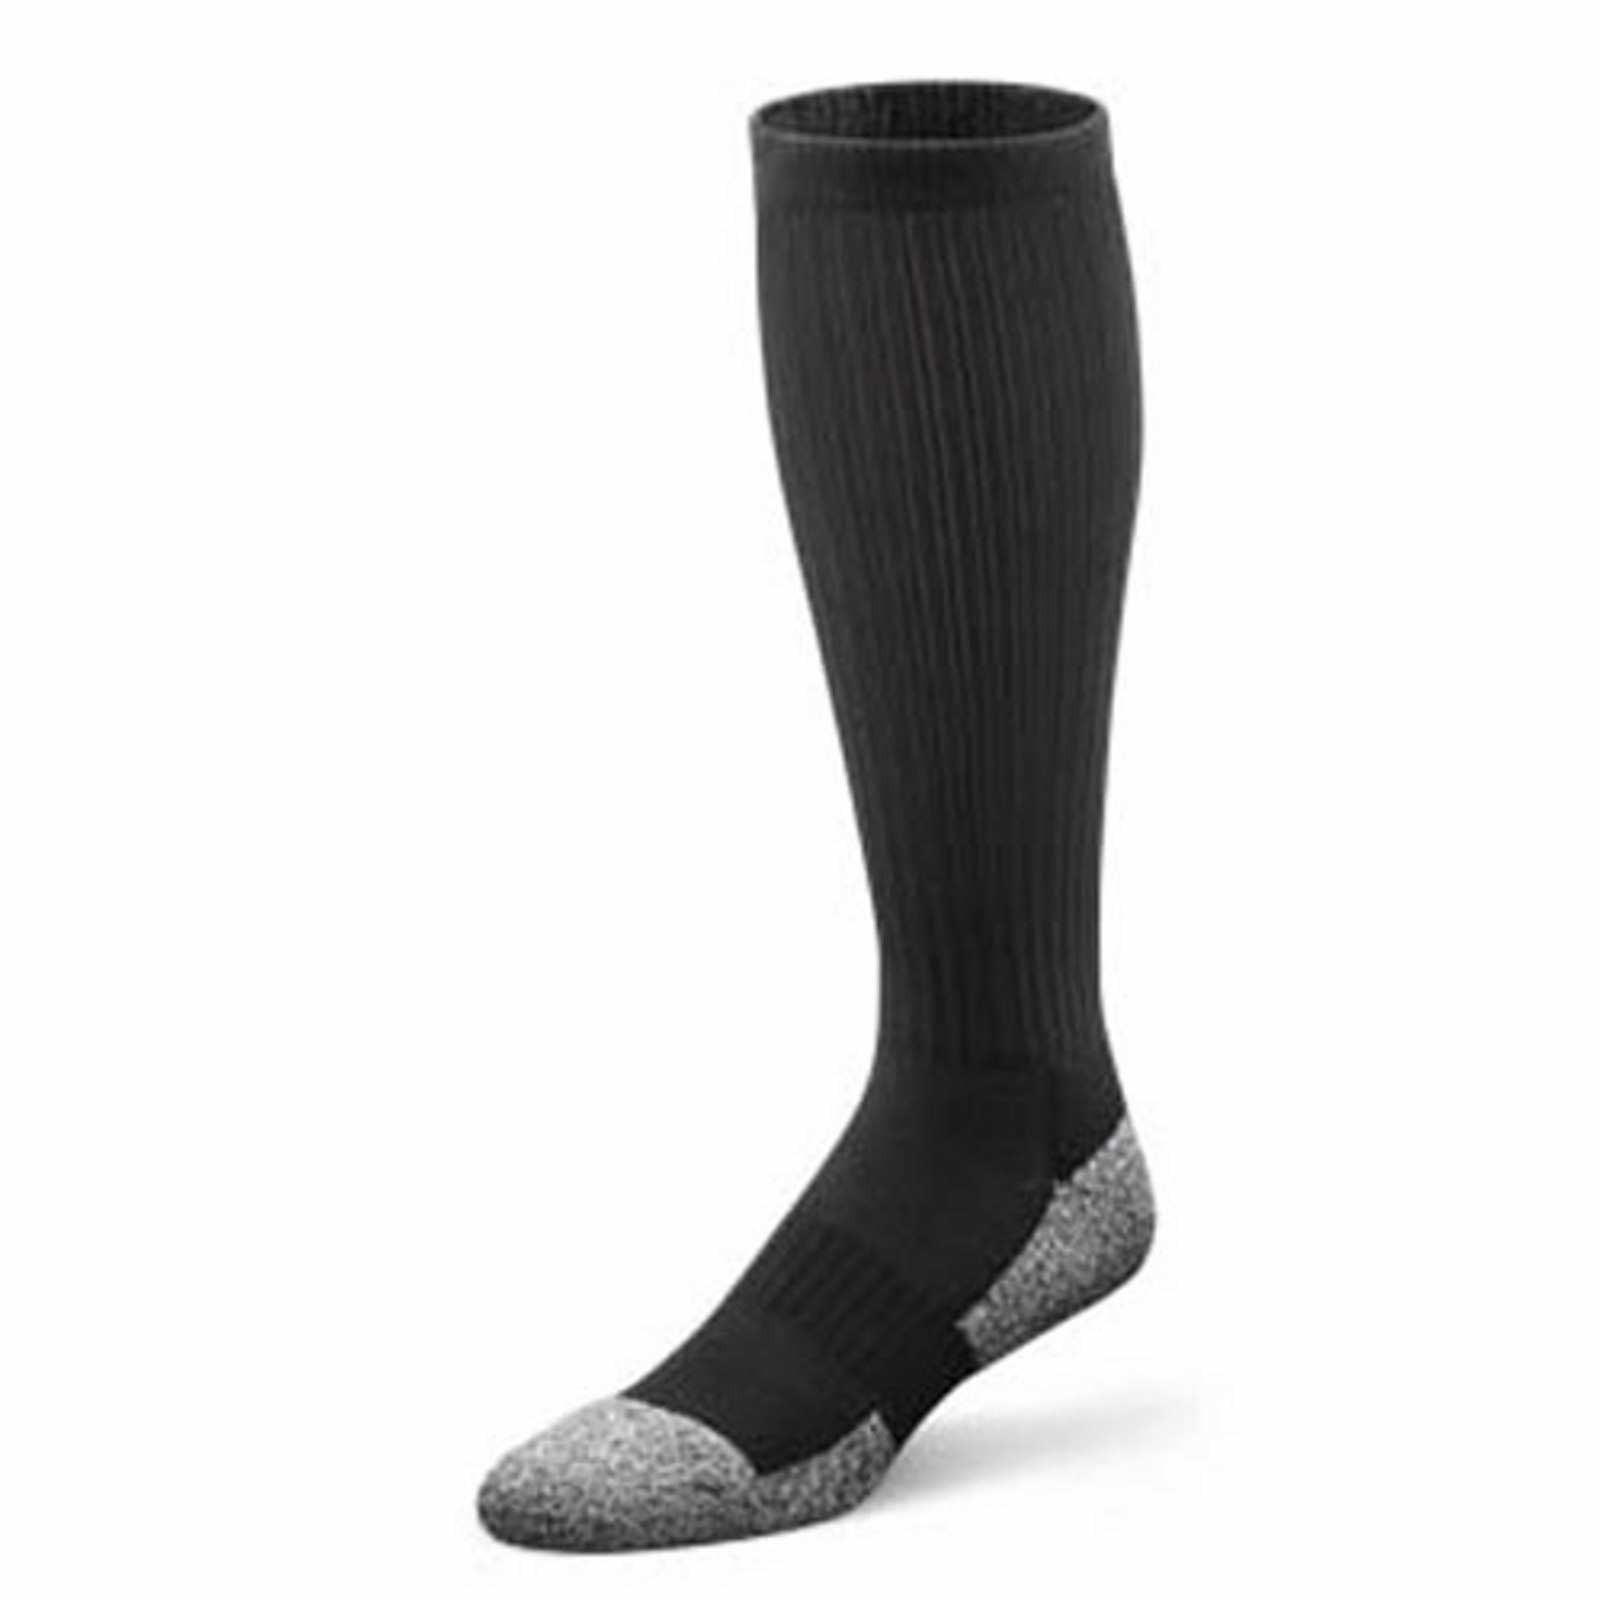 Dr. Comfort Over-the-Calf - Women's Socks